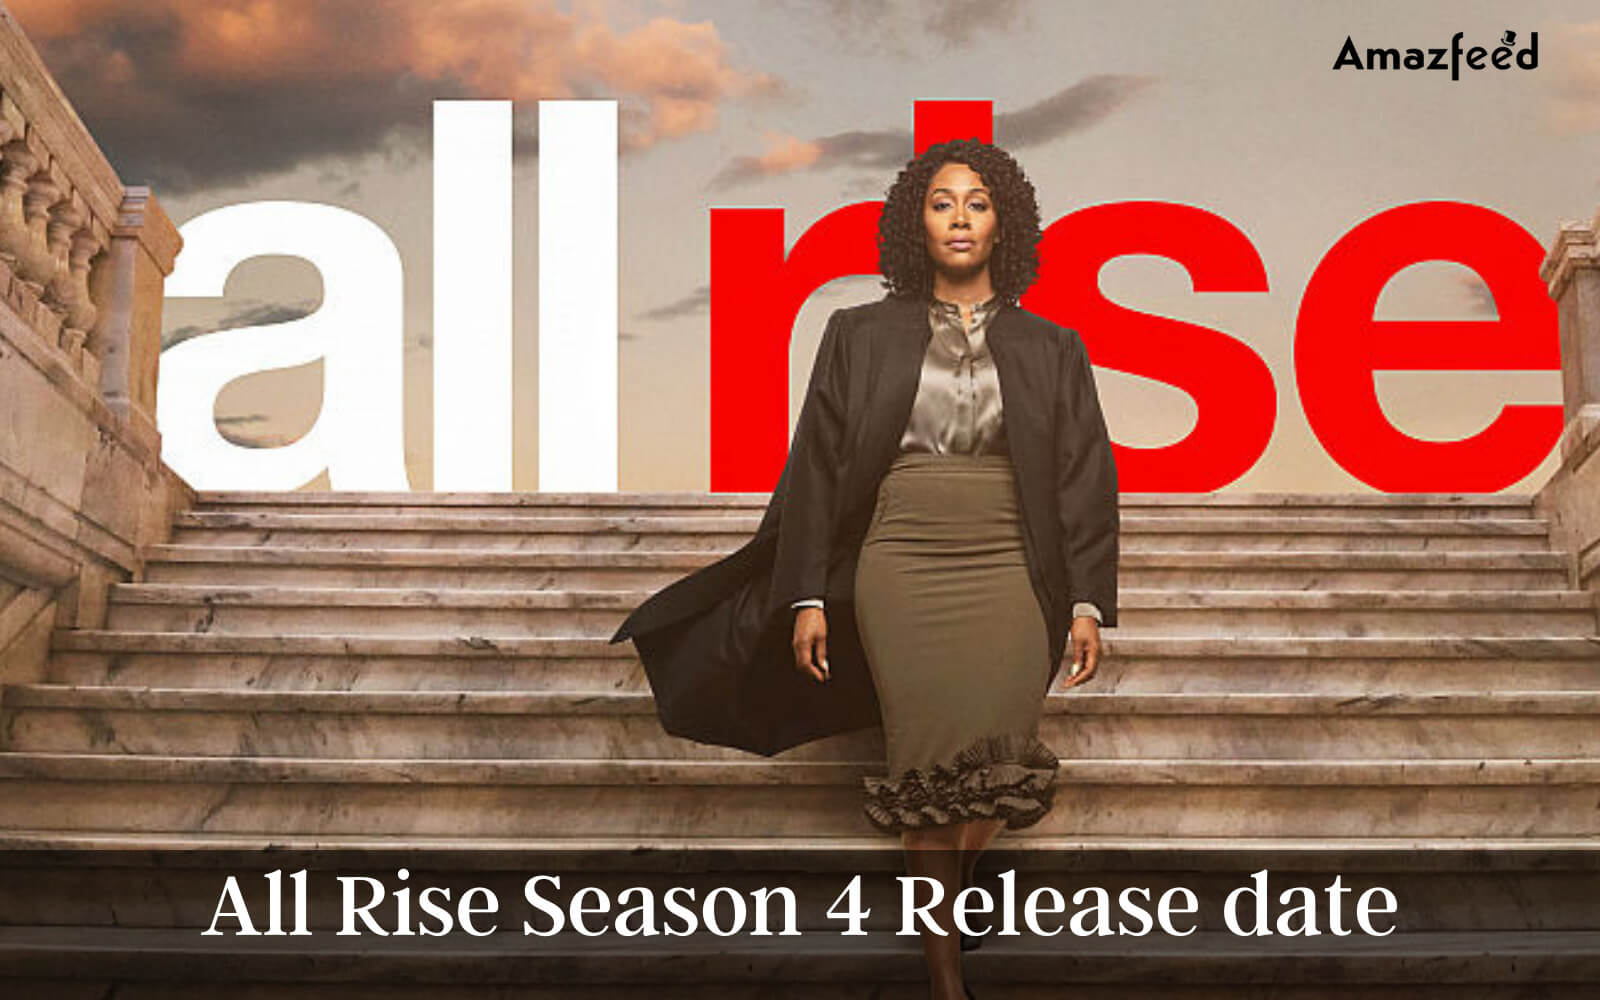 All Rise Season 4 Release date